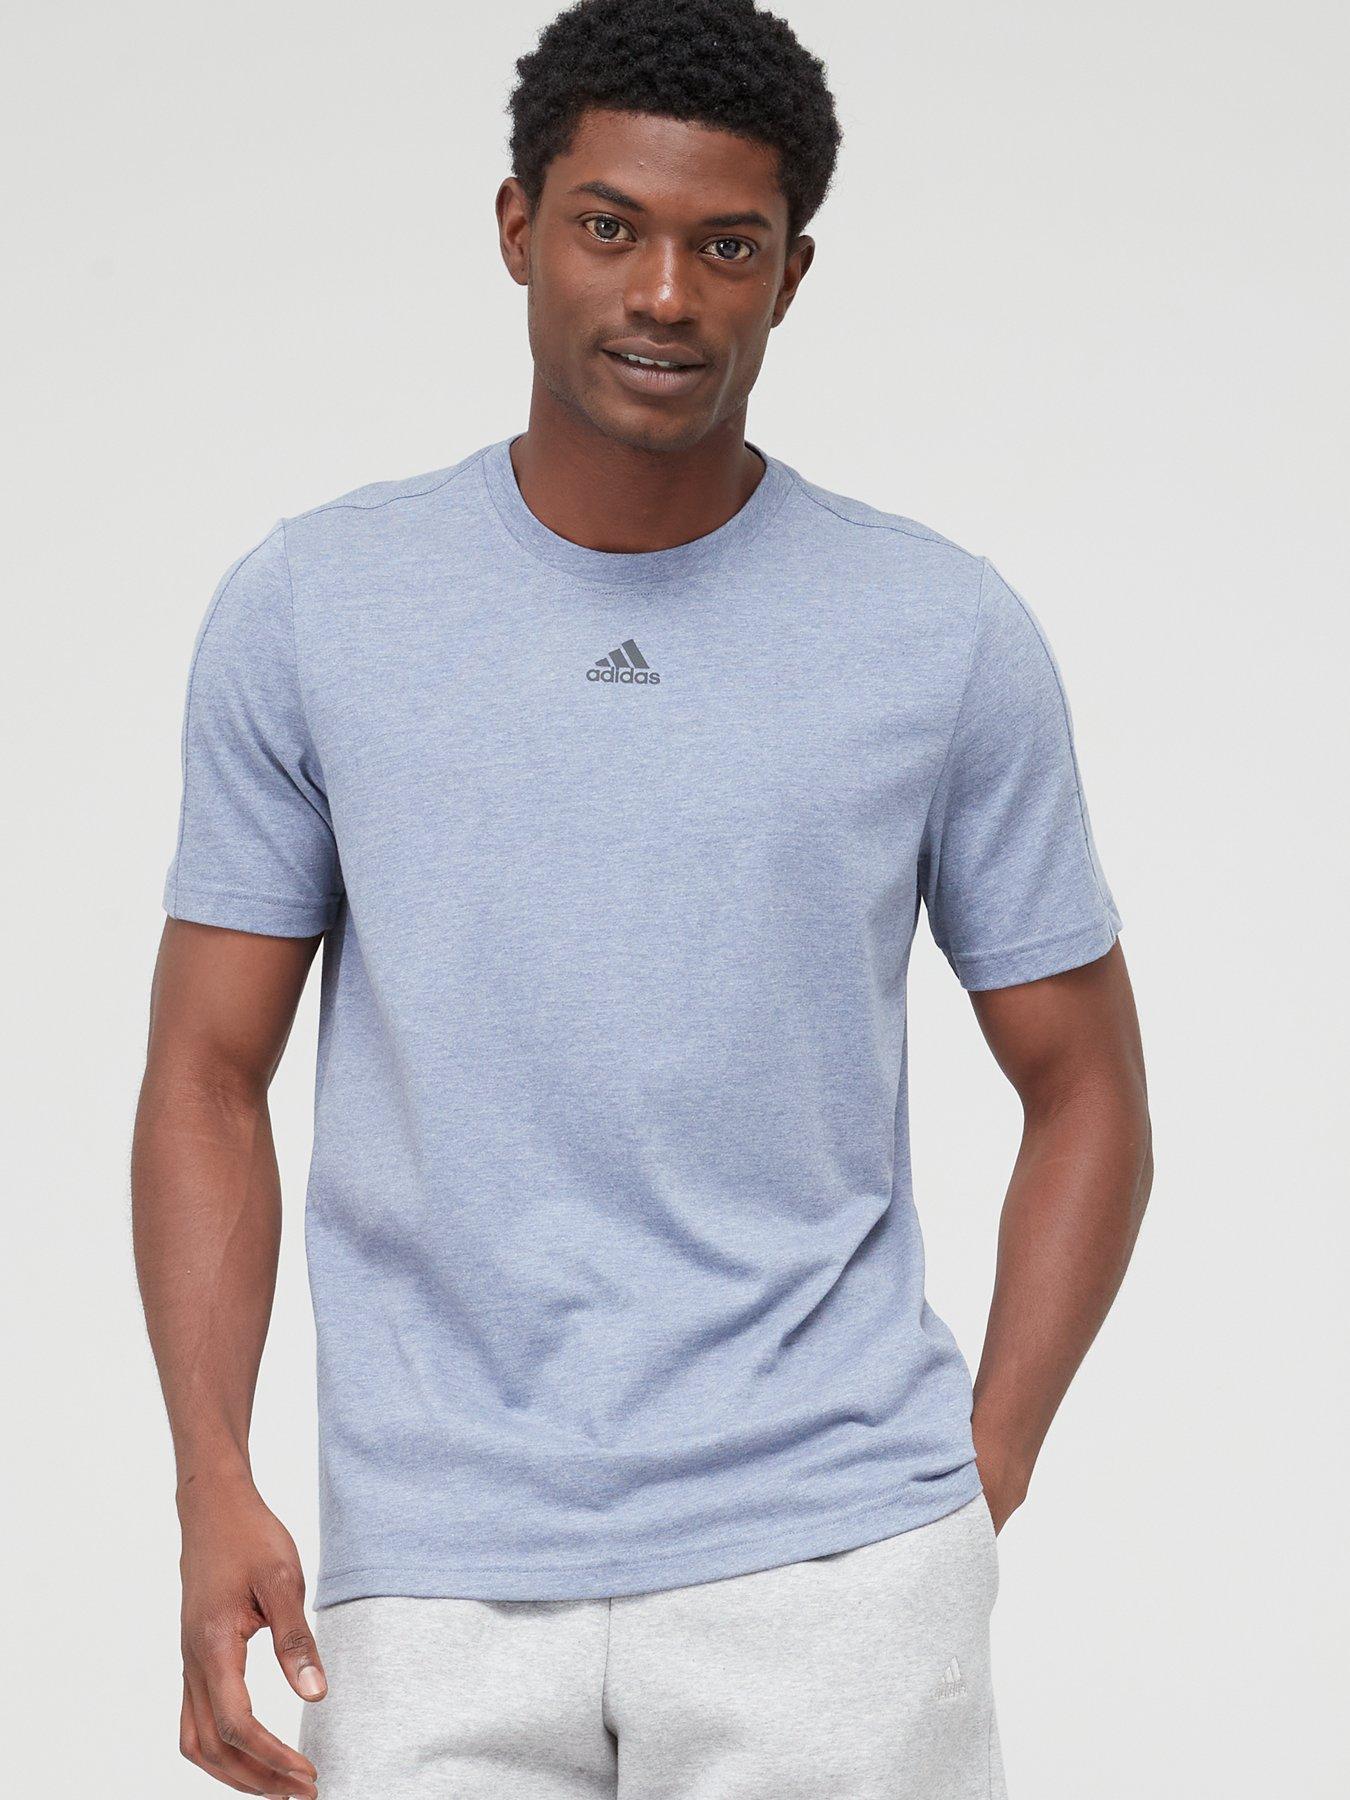 Nedsænkning i går hvede Adidas T Shirts | Shop Adidas T Shirts at Very.co.uk